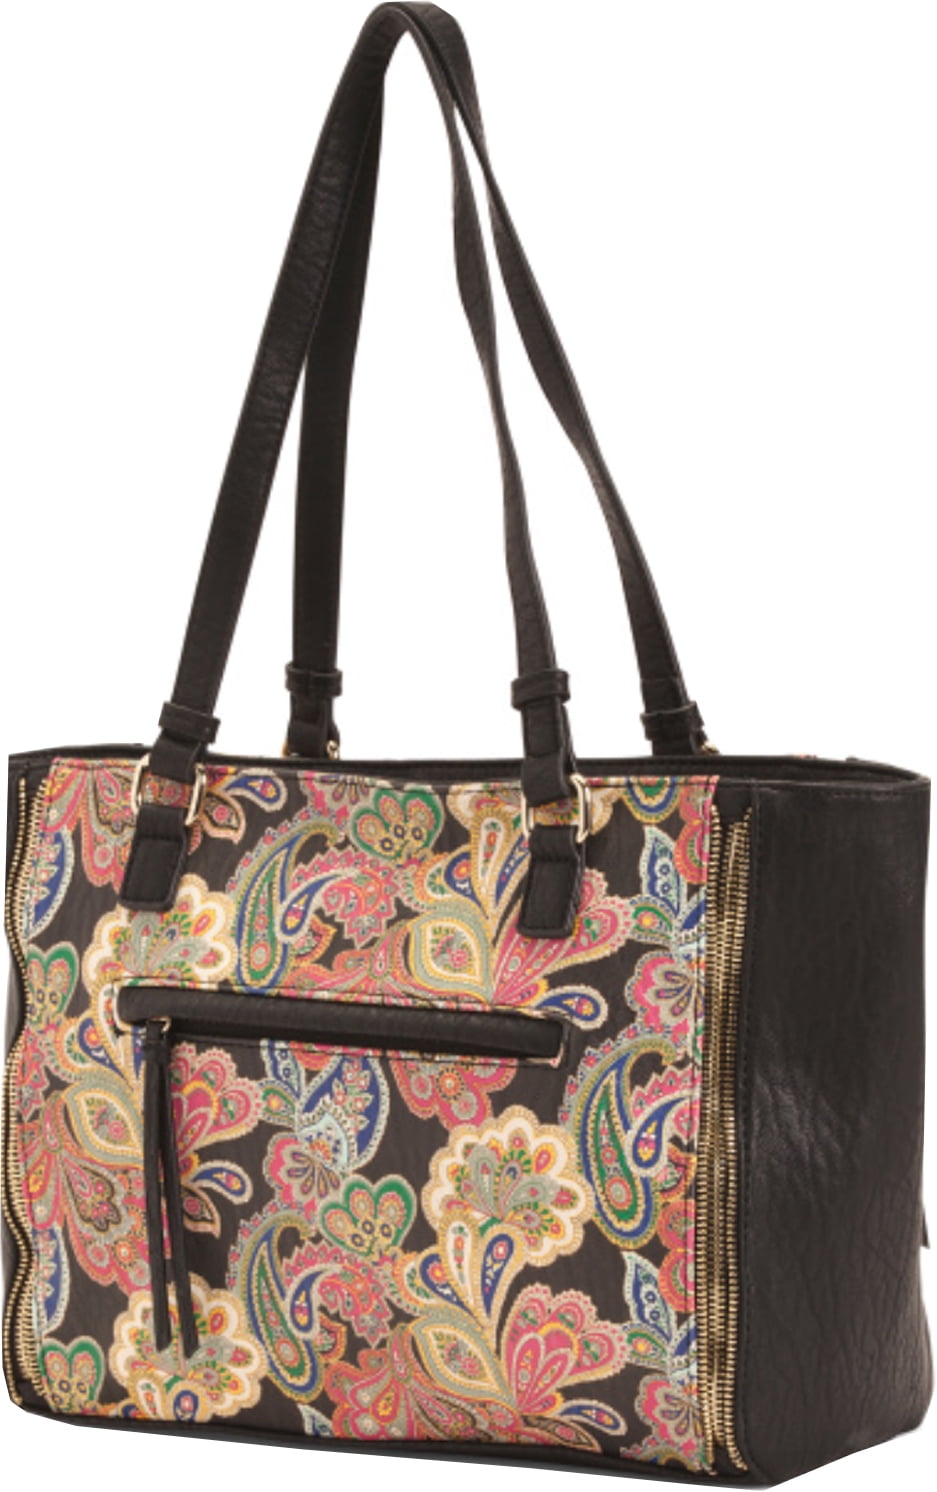 Jessica Simpson Norah Black Puffer Purse Larger Shoppers Tote Shoulder Bag  | eBay